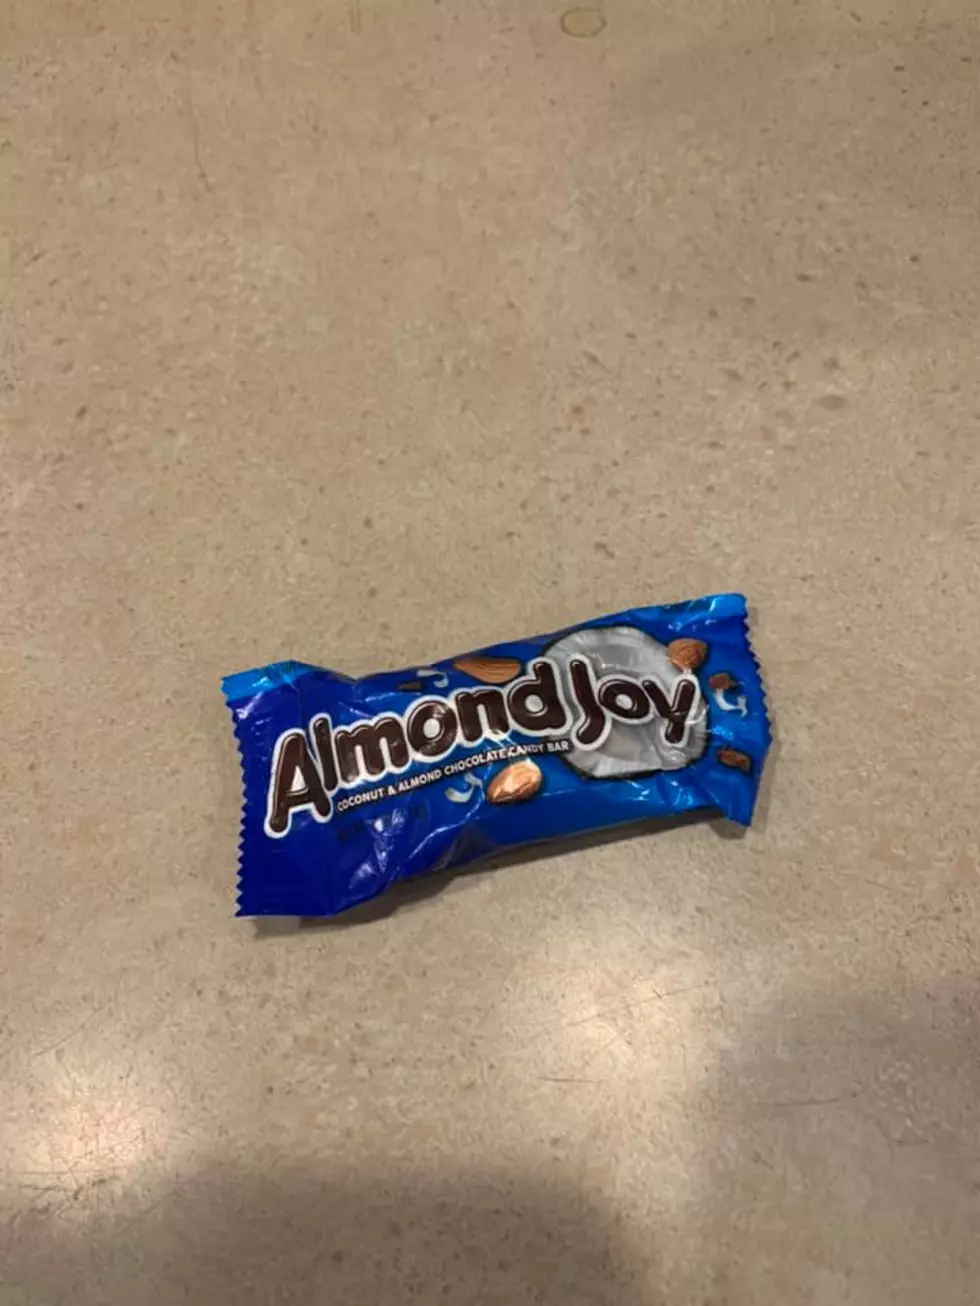 Almond Joy: People Actually Like Them